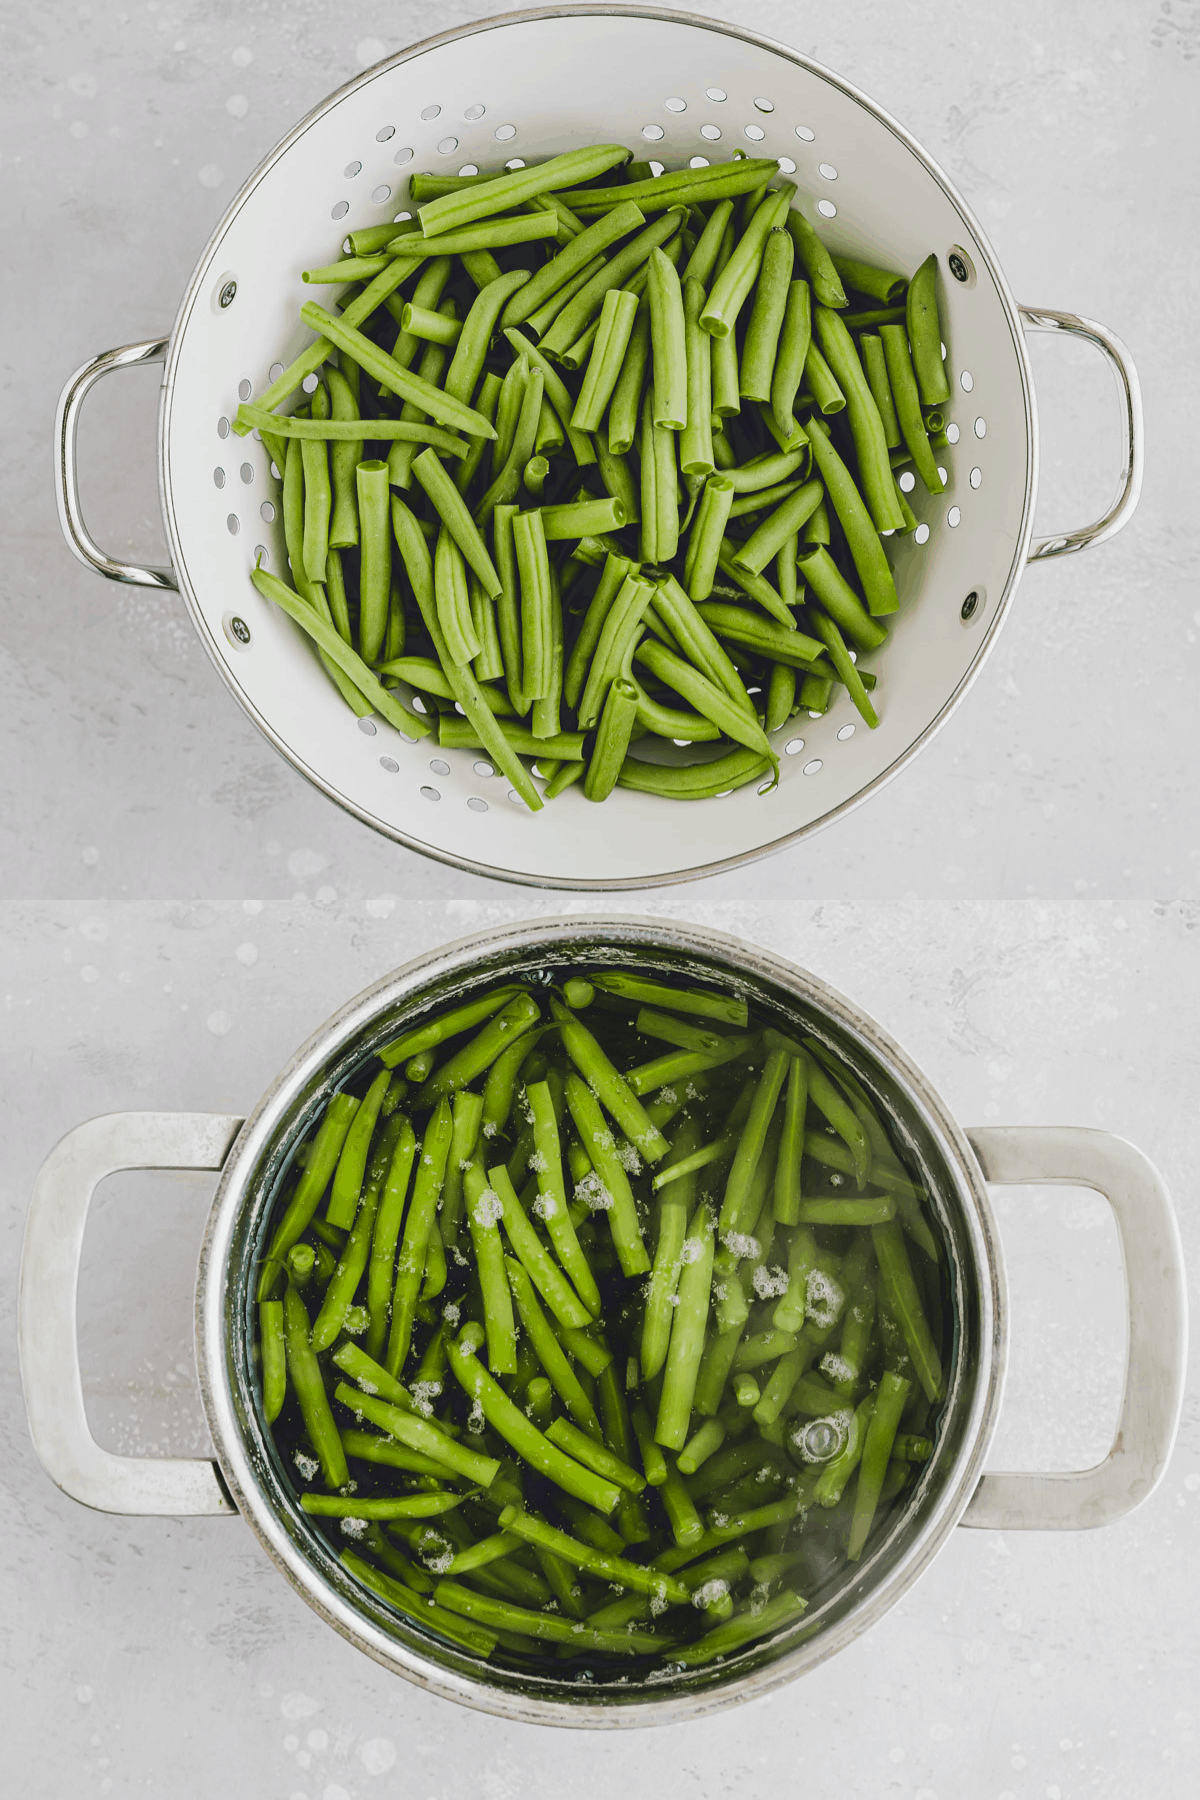 Green Bean Salad Recipe Step 1-2